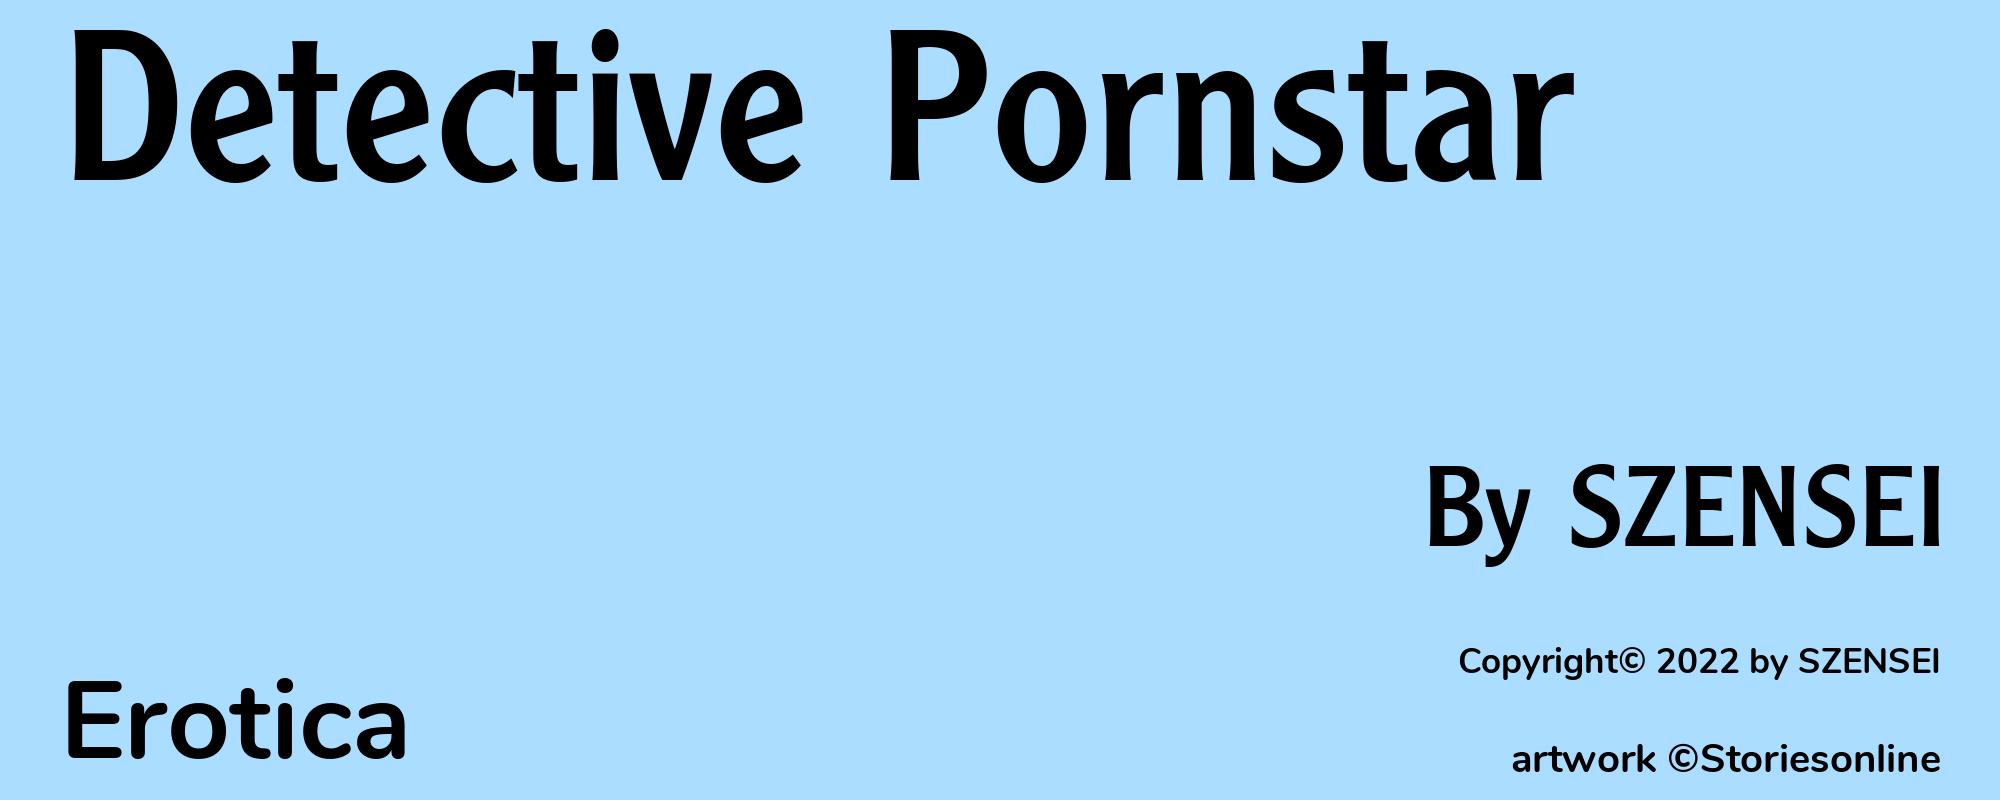 Detective Pornstar - Cover